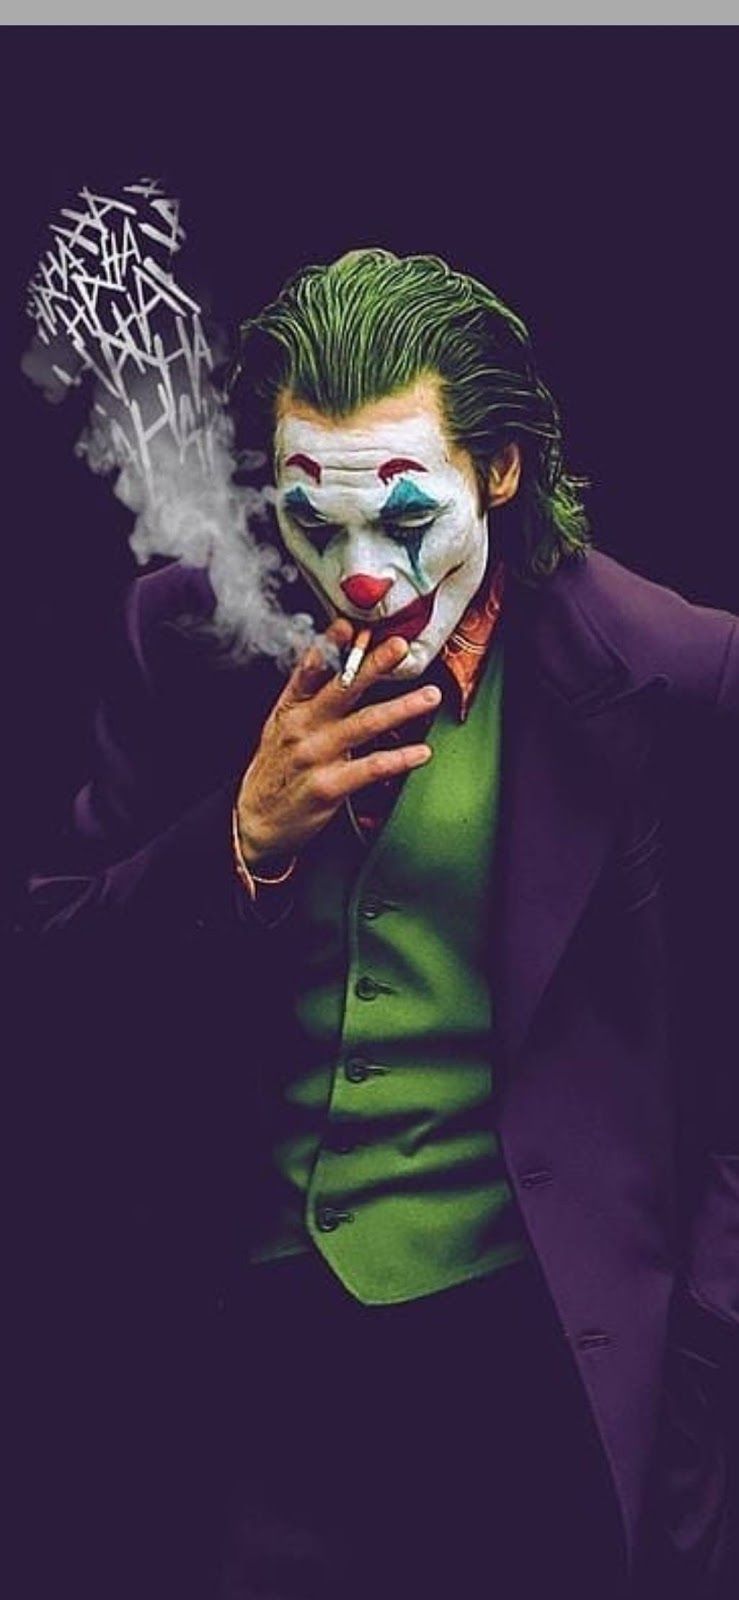 Free download Download Joker wallpaper by MoosaBaig152 2d Free on ...